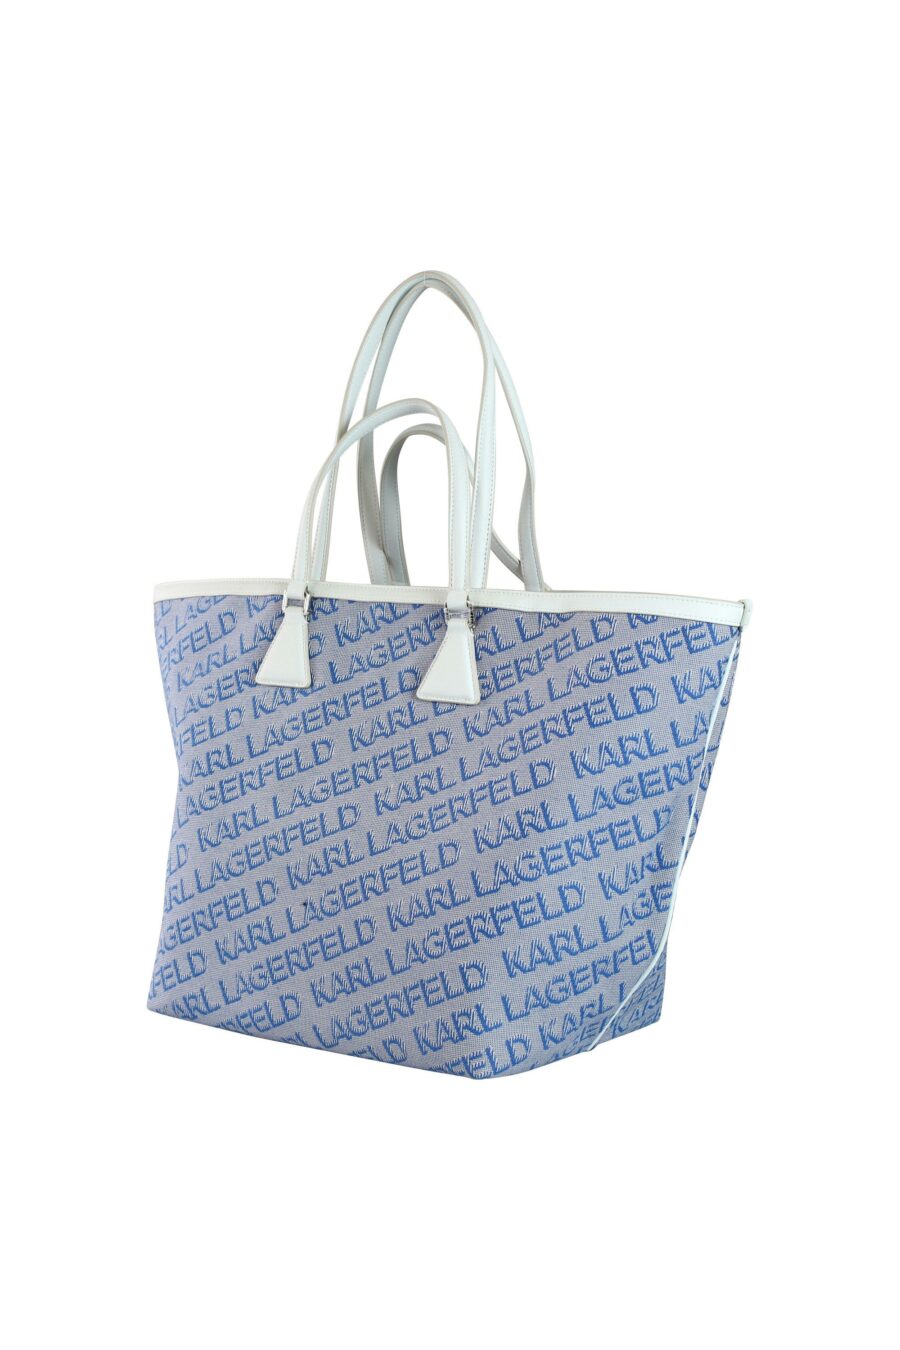 Tote bag blue "all over logo" - 8720744234203 2